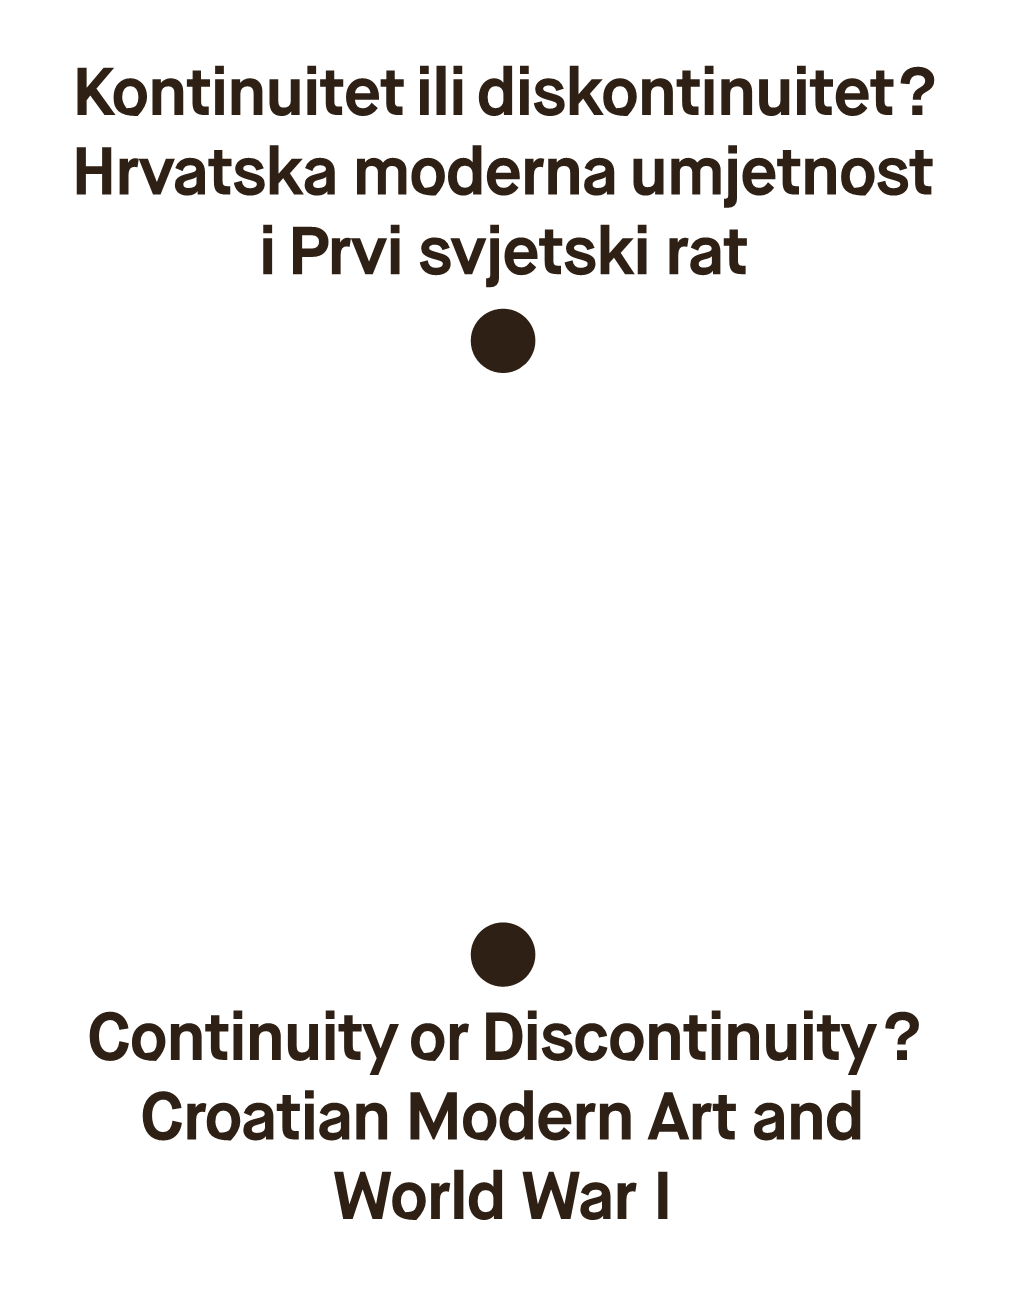 Continuity Or Discontinuity ? Croatian Modern Art and World War I